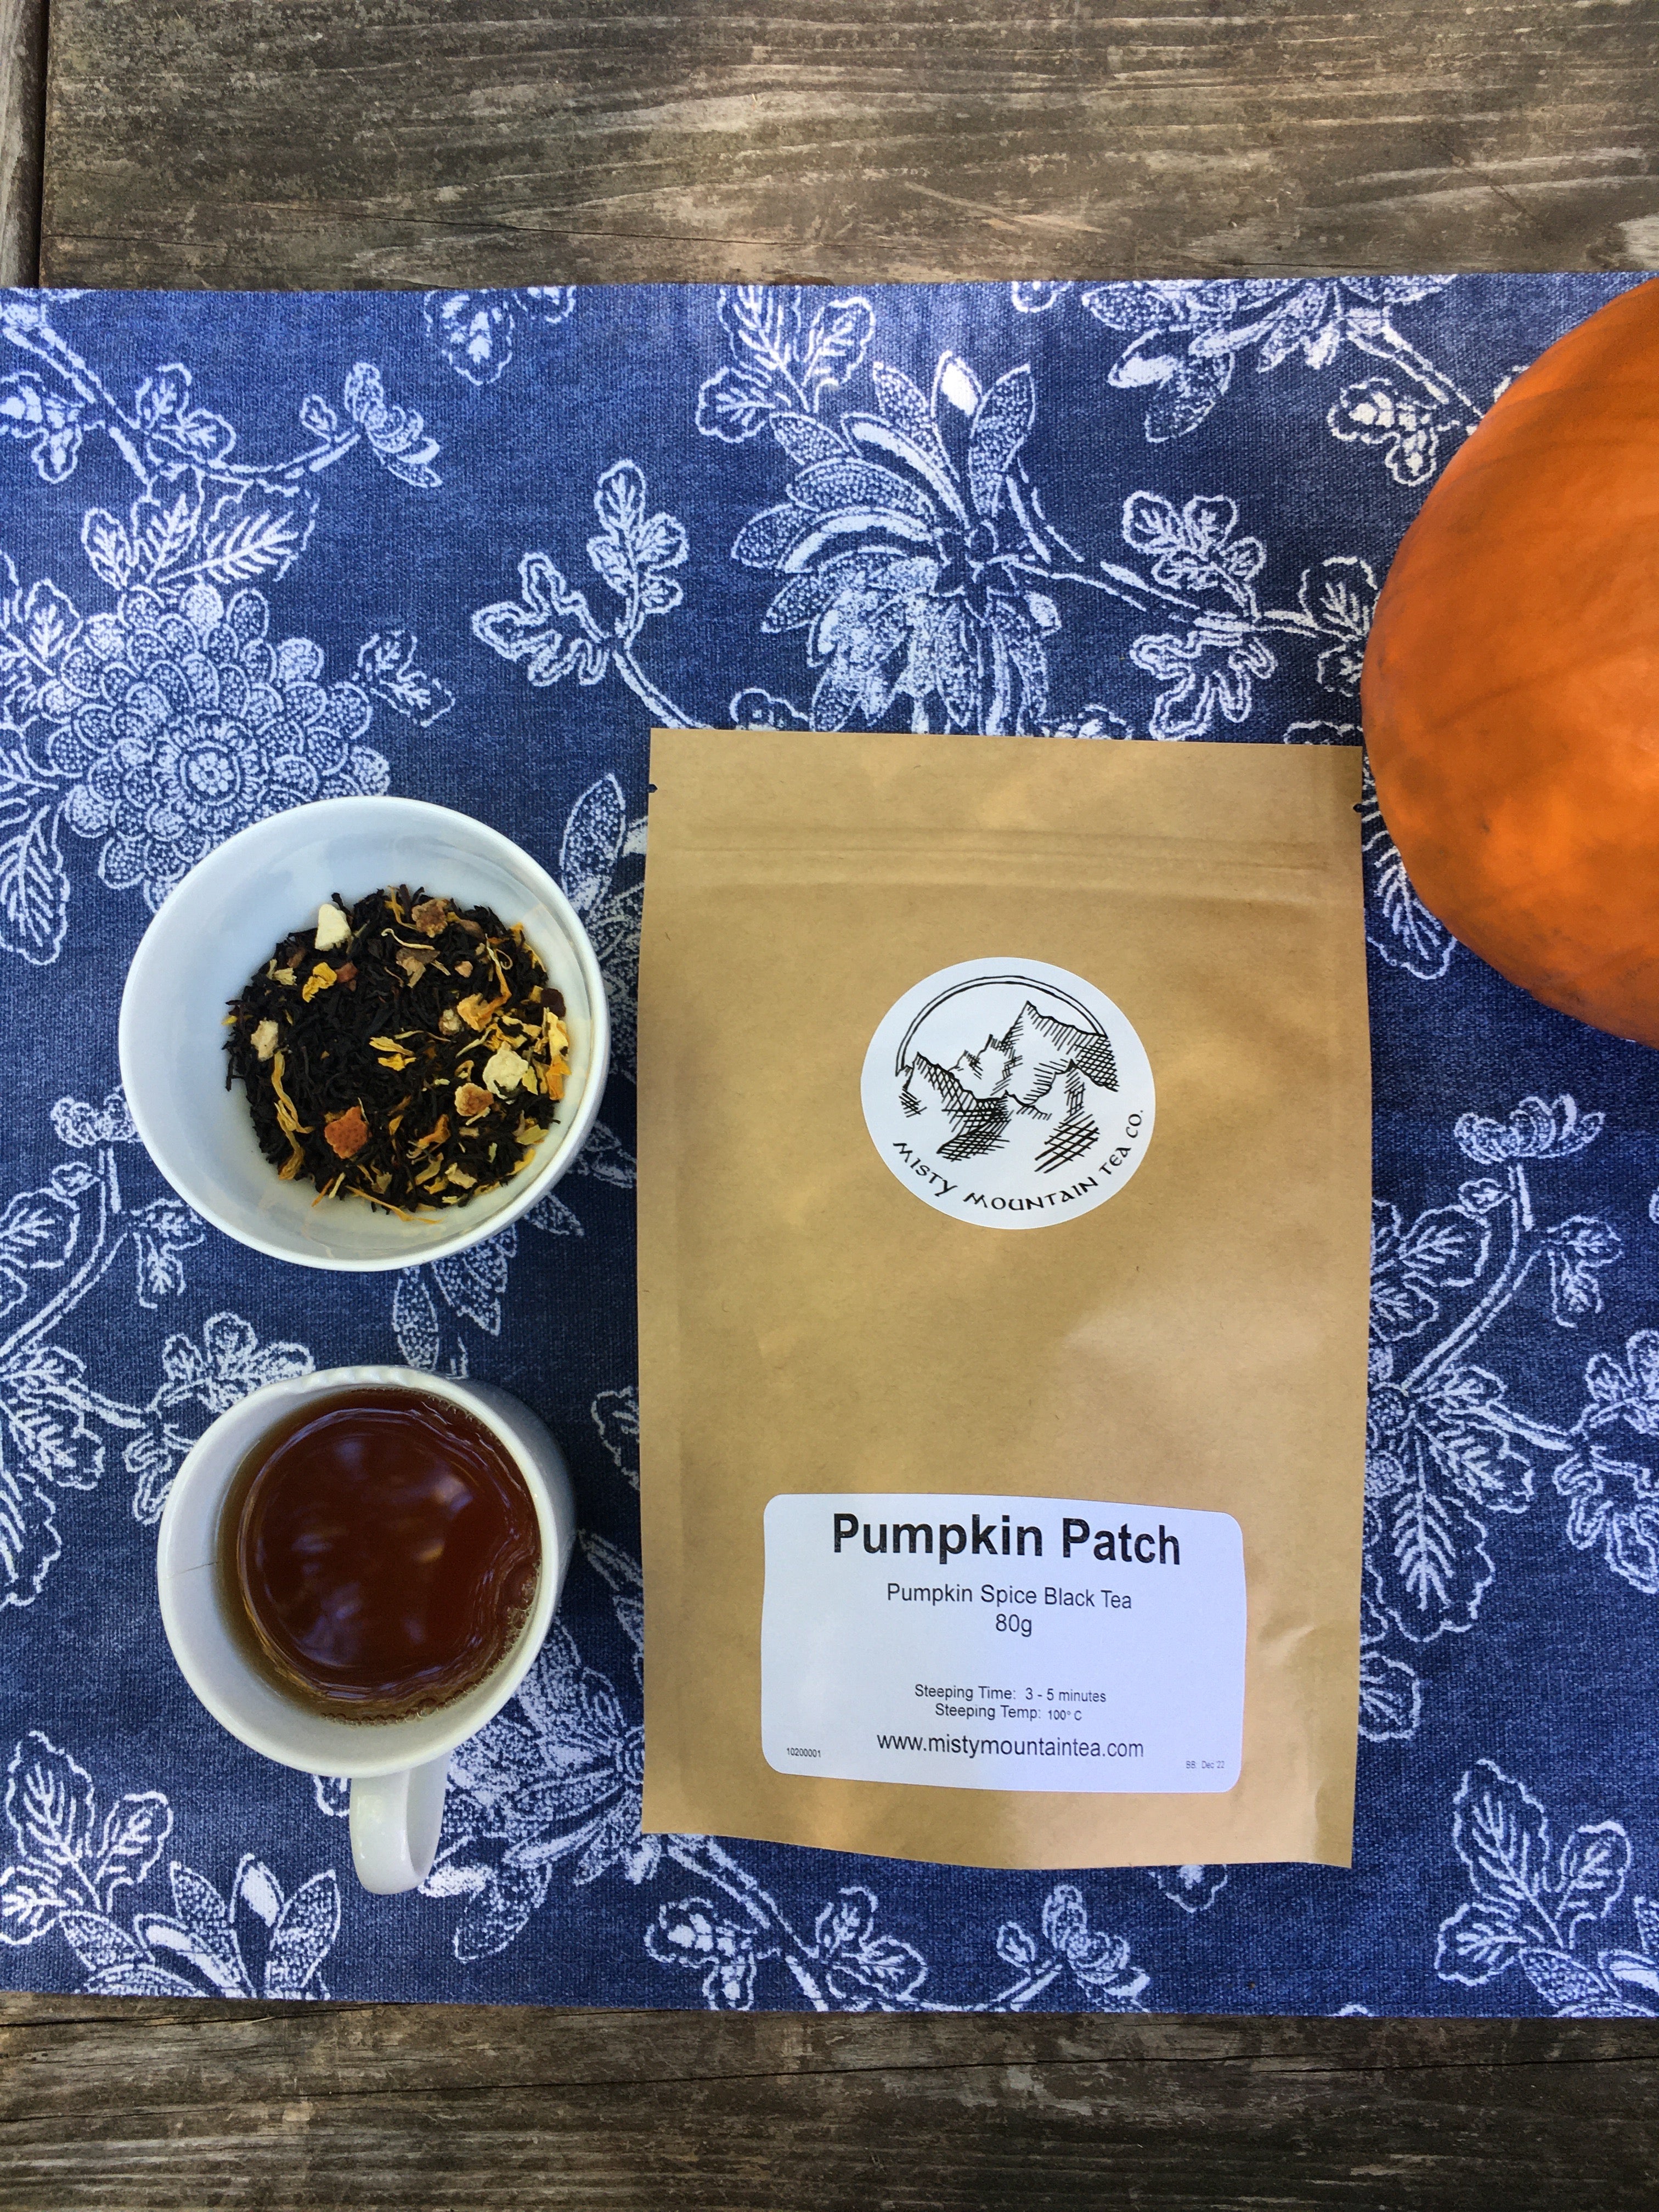 Pumpkin Patch - Pumpkin Spice Black Tea